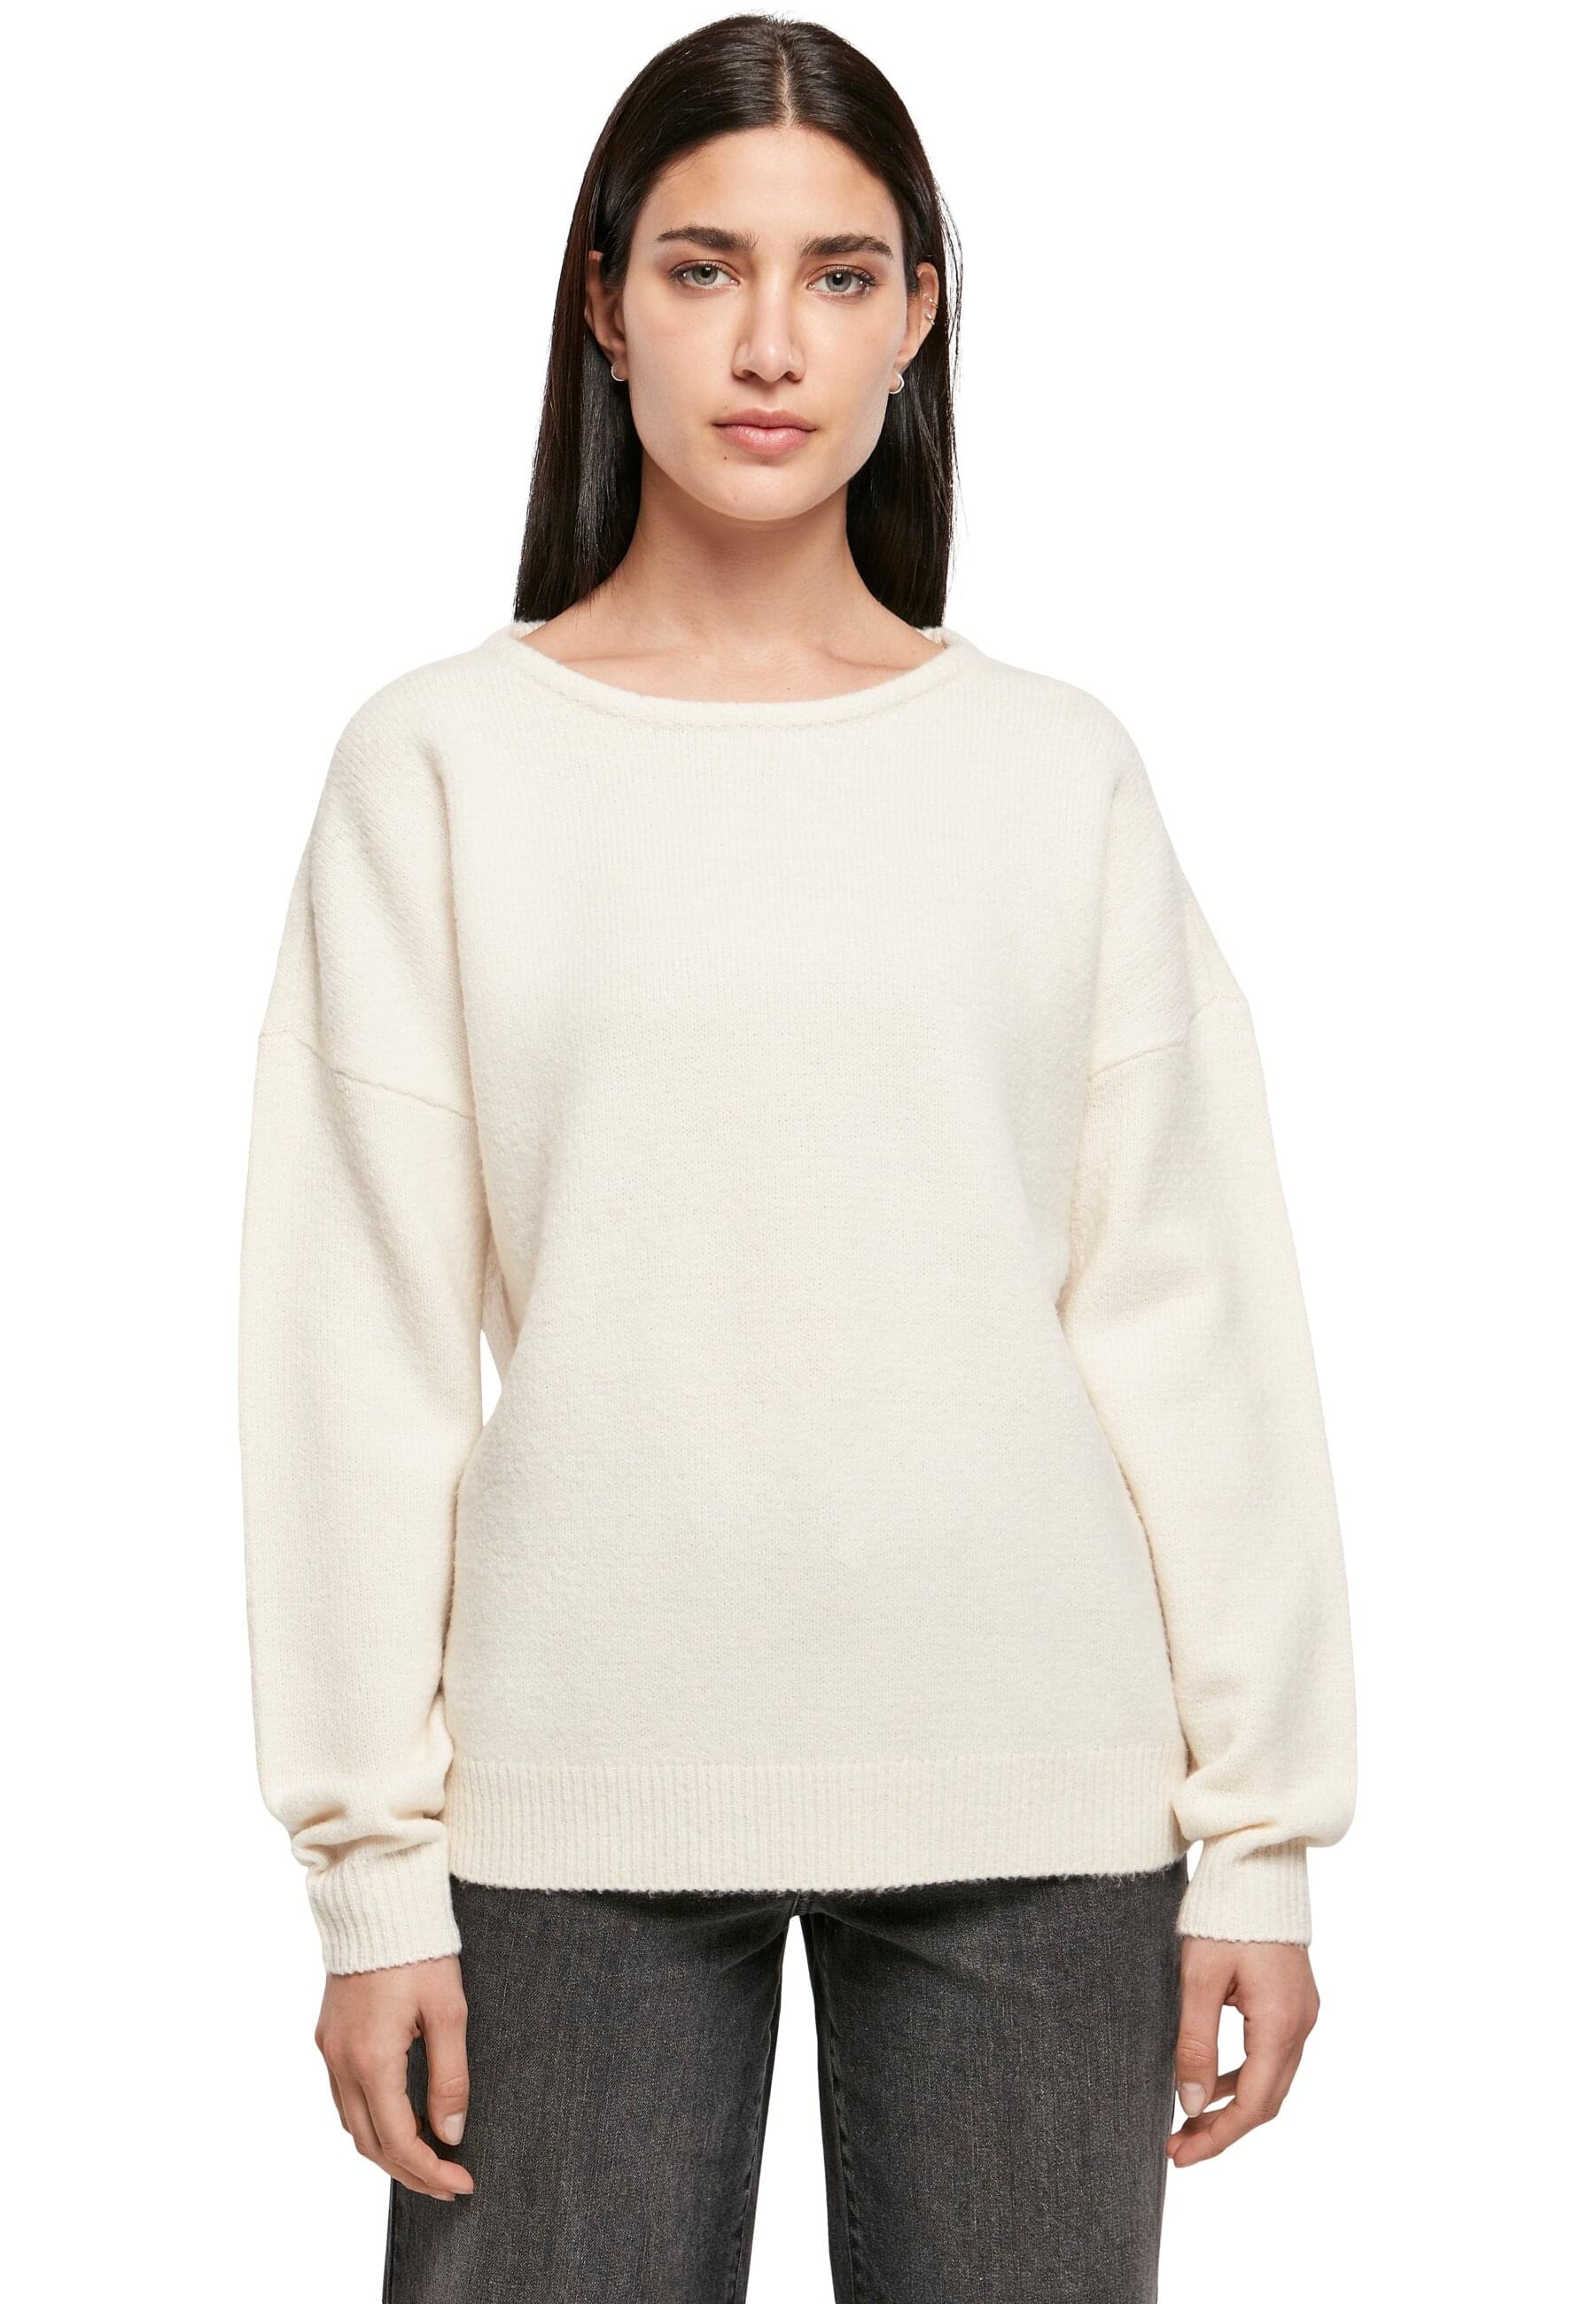 URBAN CLASSICS Sweatshirt »Damen Ladies Chunky Fluffy Sweater«, (1 tlg.)  online kaufen | I'm walking